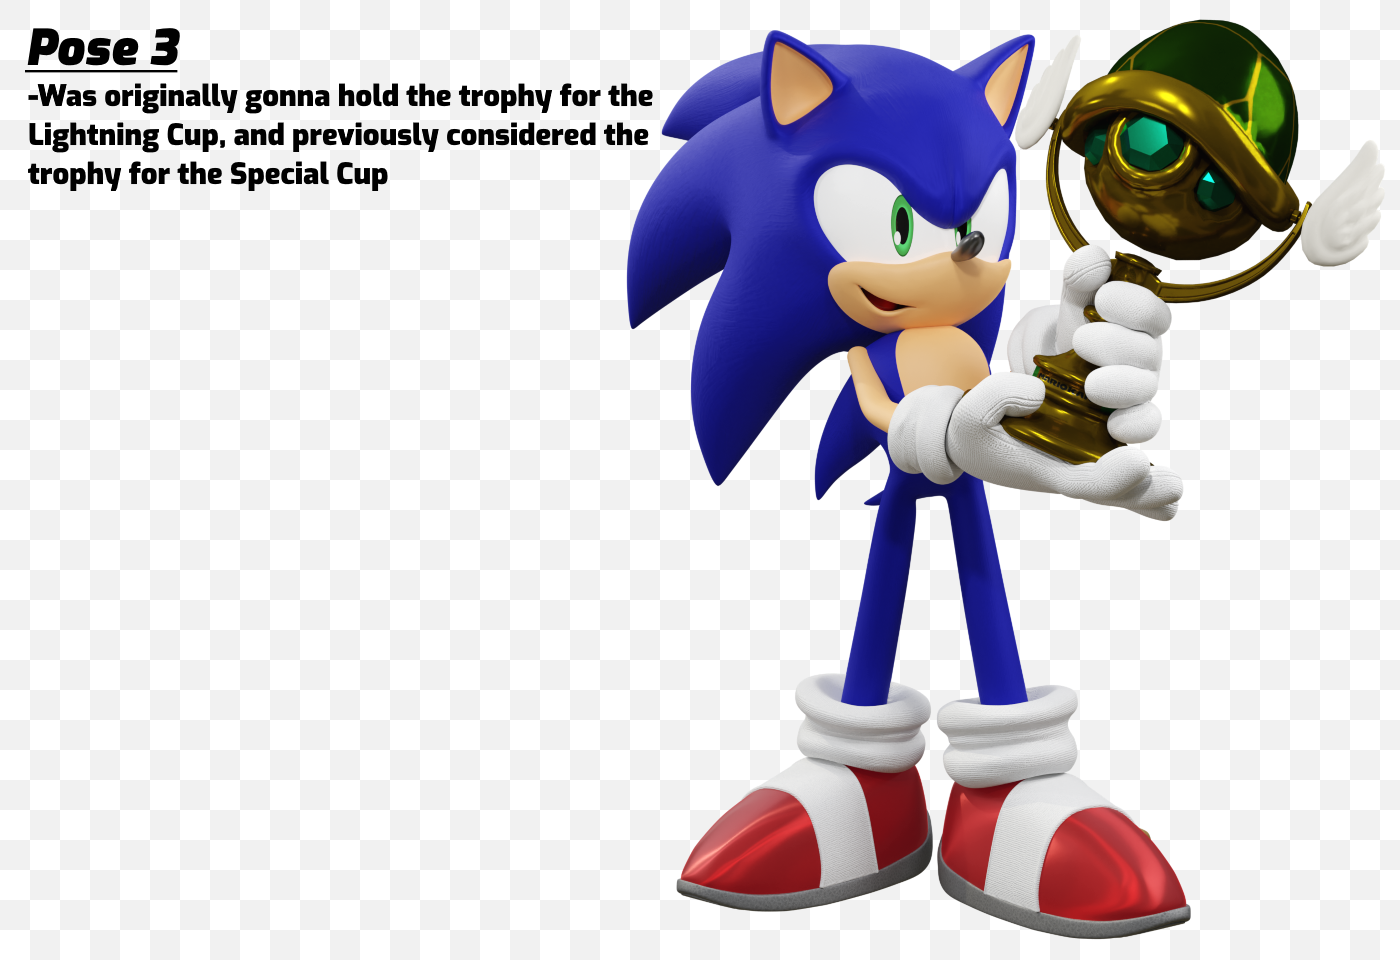 concept Gaming graphic design  mario mariokart Nintendo sonic SonicTheHedgehog Video Games